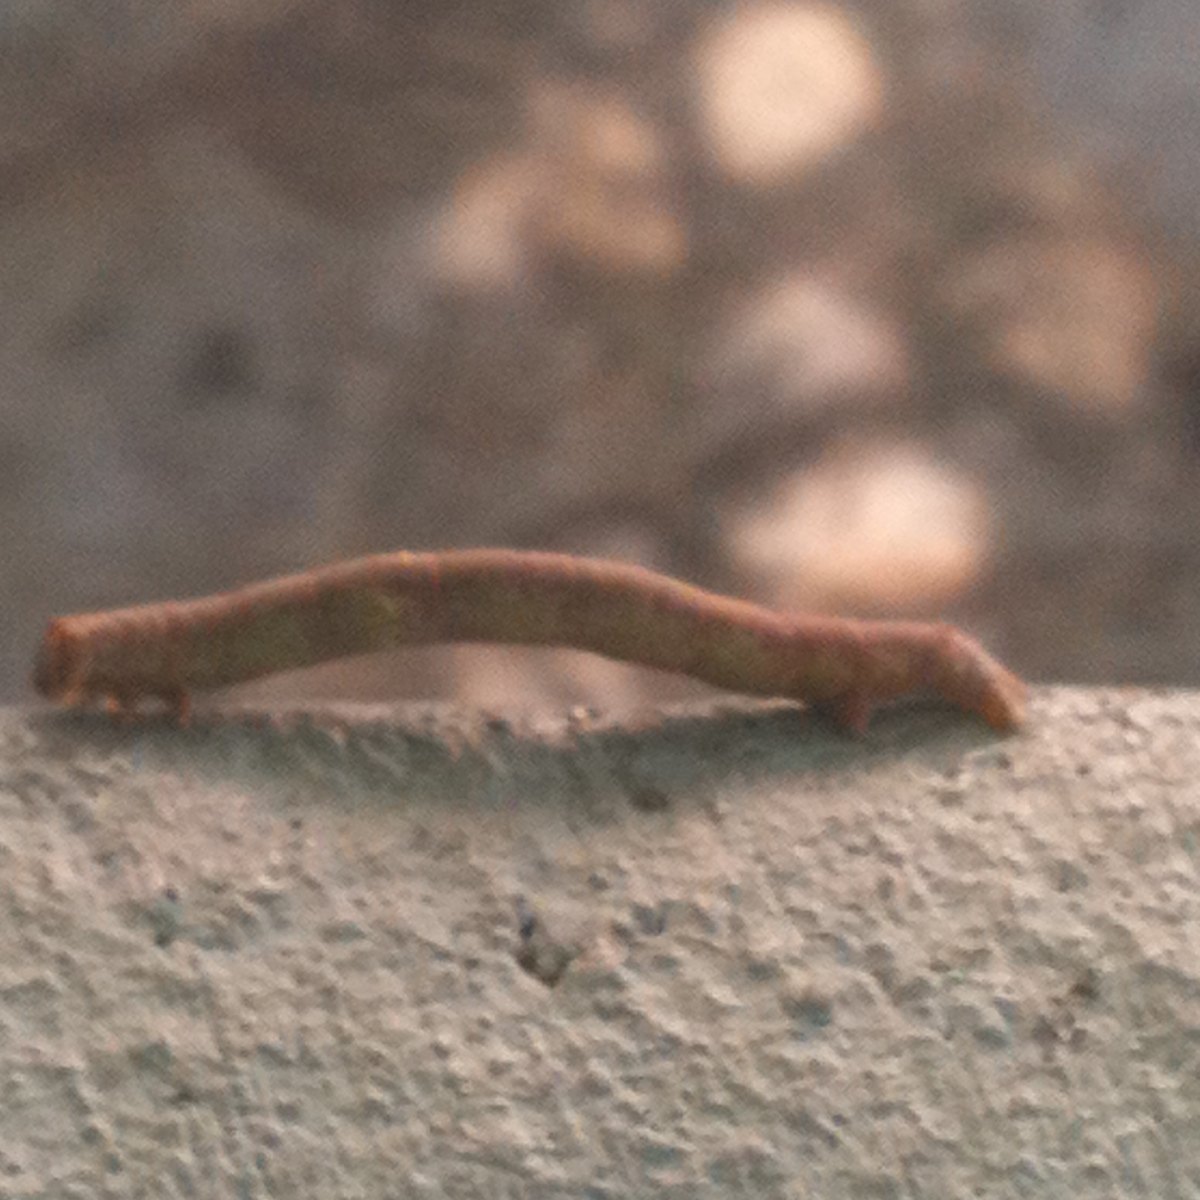 Inchworm